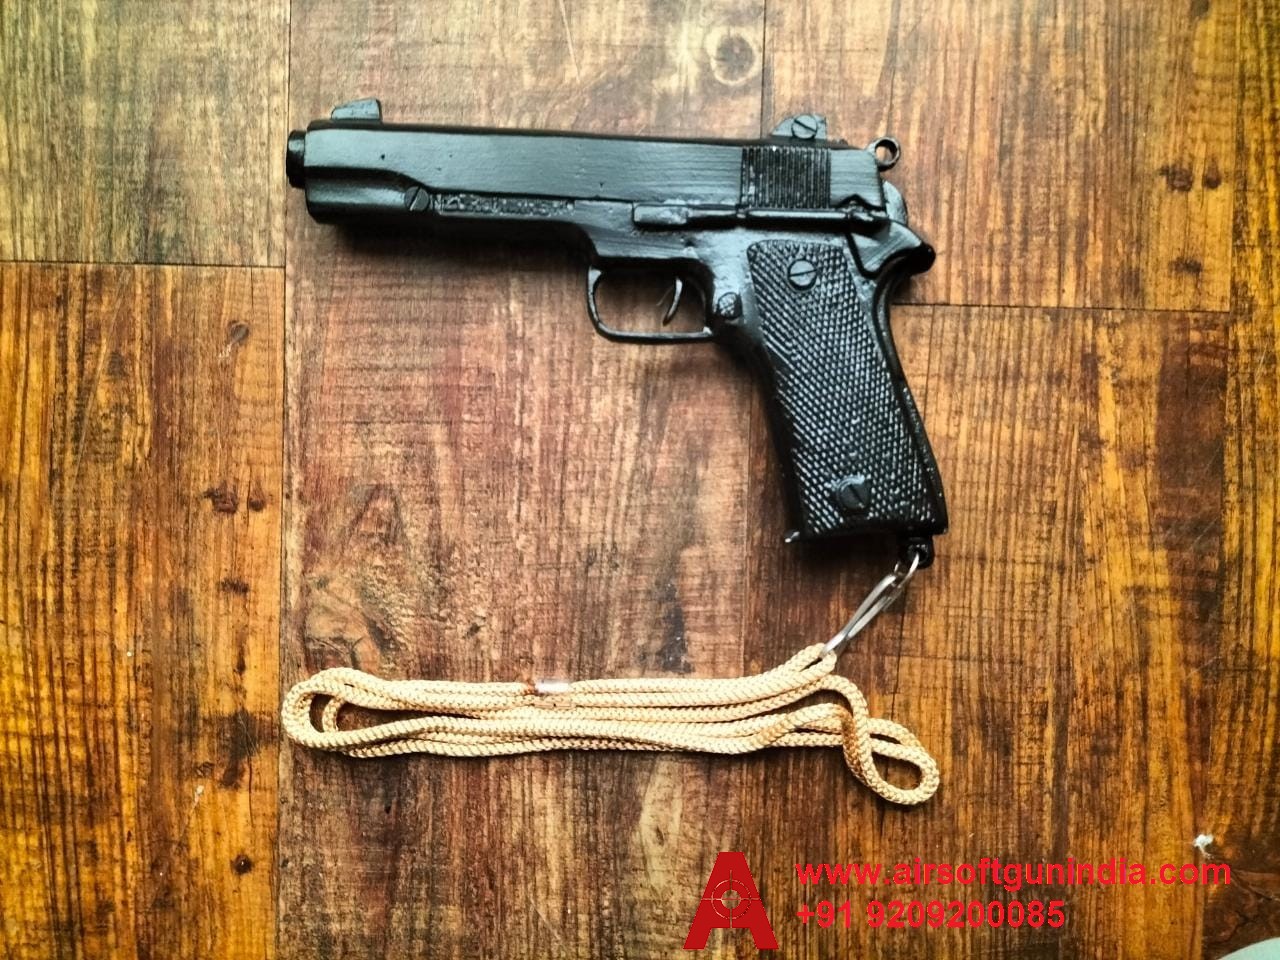 CORK GUN BERETTA STYLE BLACK  ( SOUND GUN ) BY AIRSOFT GUN INDIA